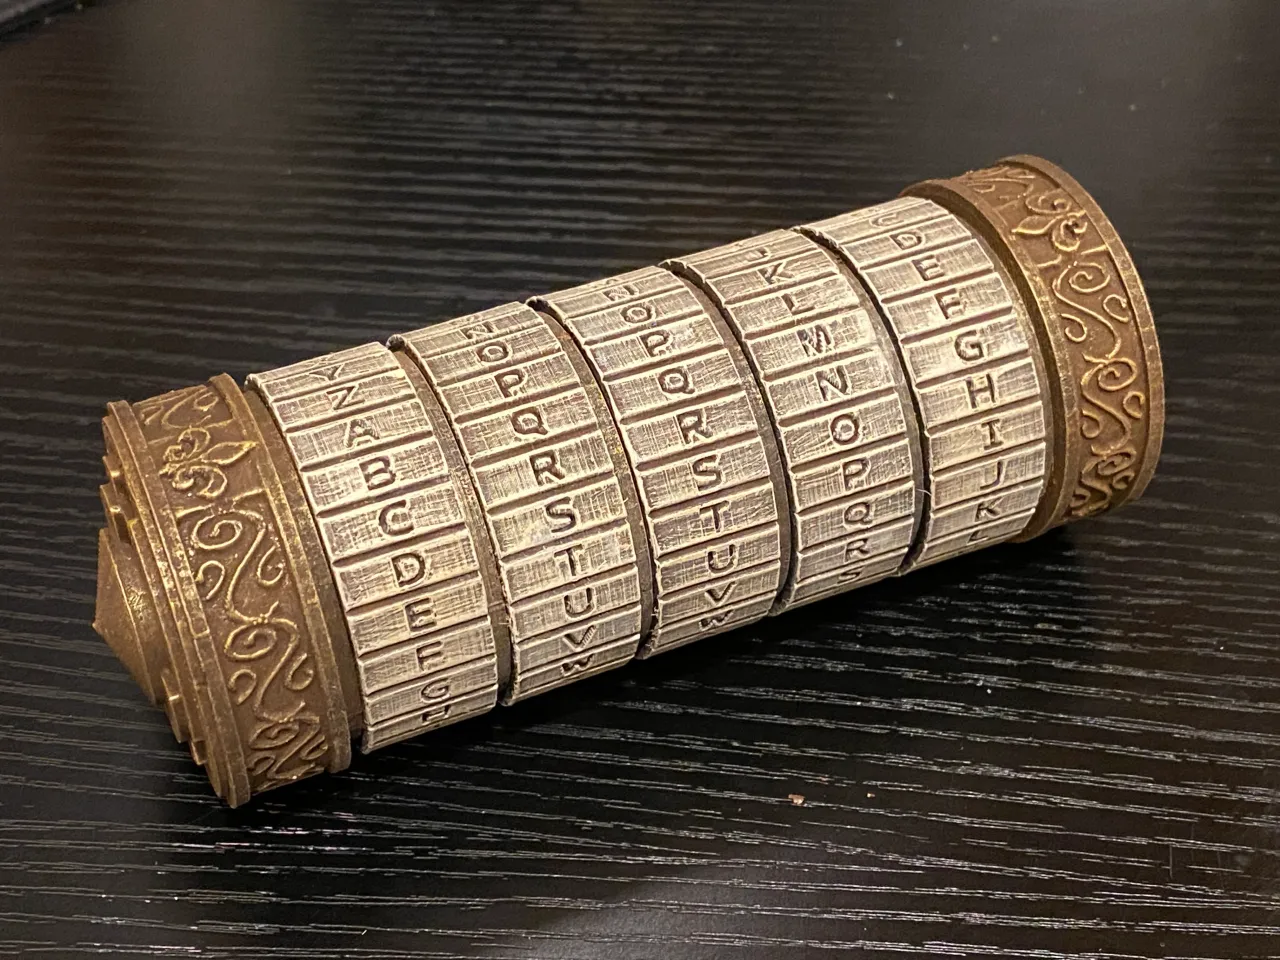 Original - The Da Vinci Code Cryptex Proposal Gift - Ring Case